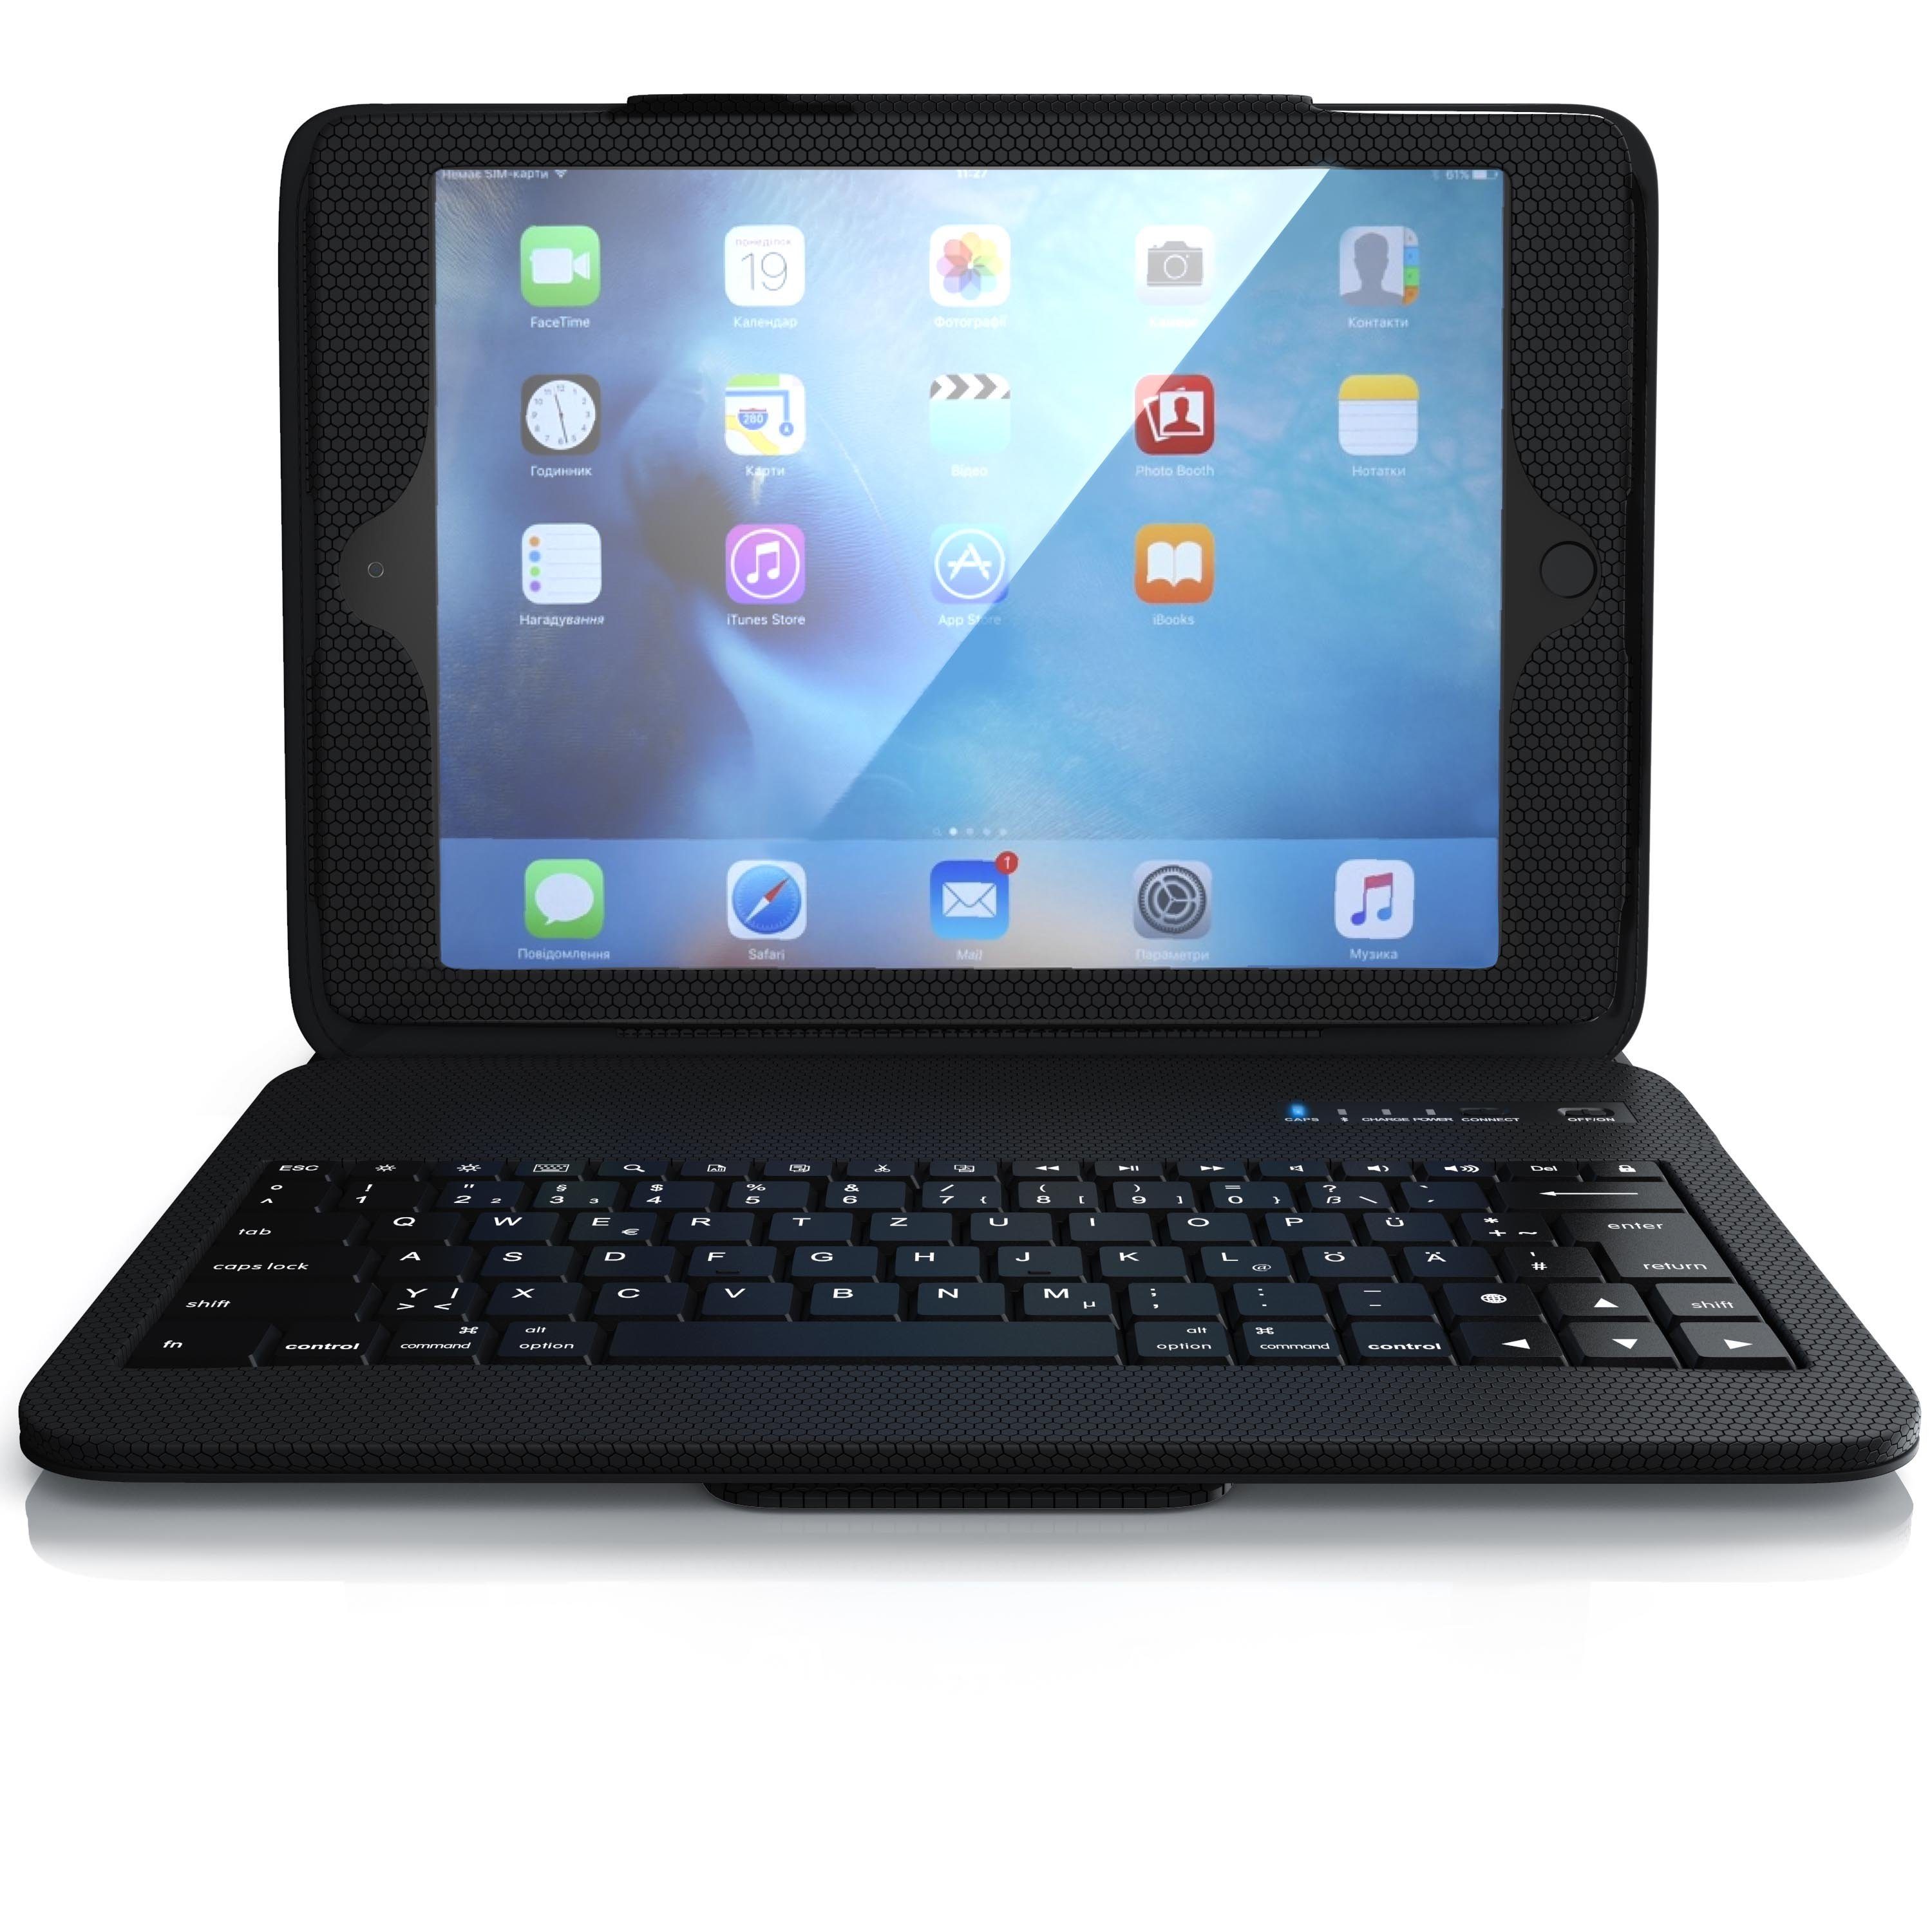 Aplic Tablet-Tastatur (Kunststoffcase, Funktionstasten, QWERTZ Bluetooth, für Apple iPad 9.7)